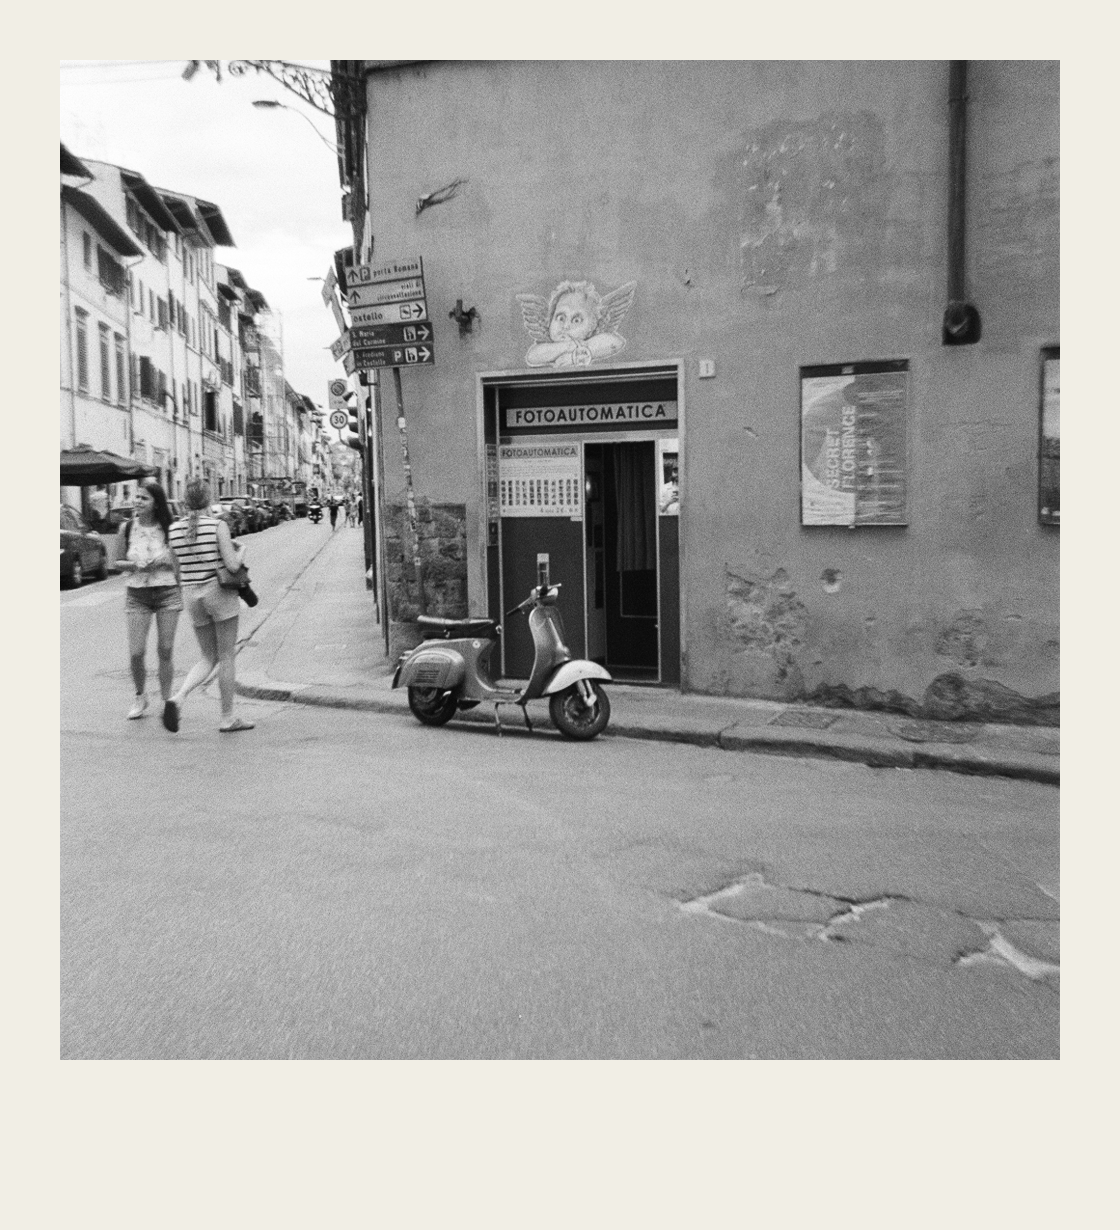 A moped on an Italian street